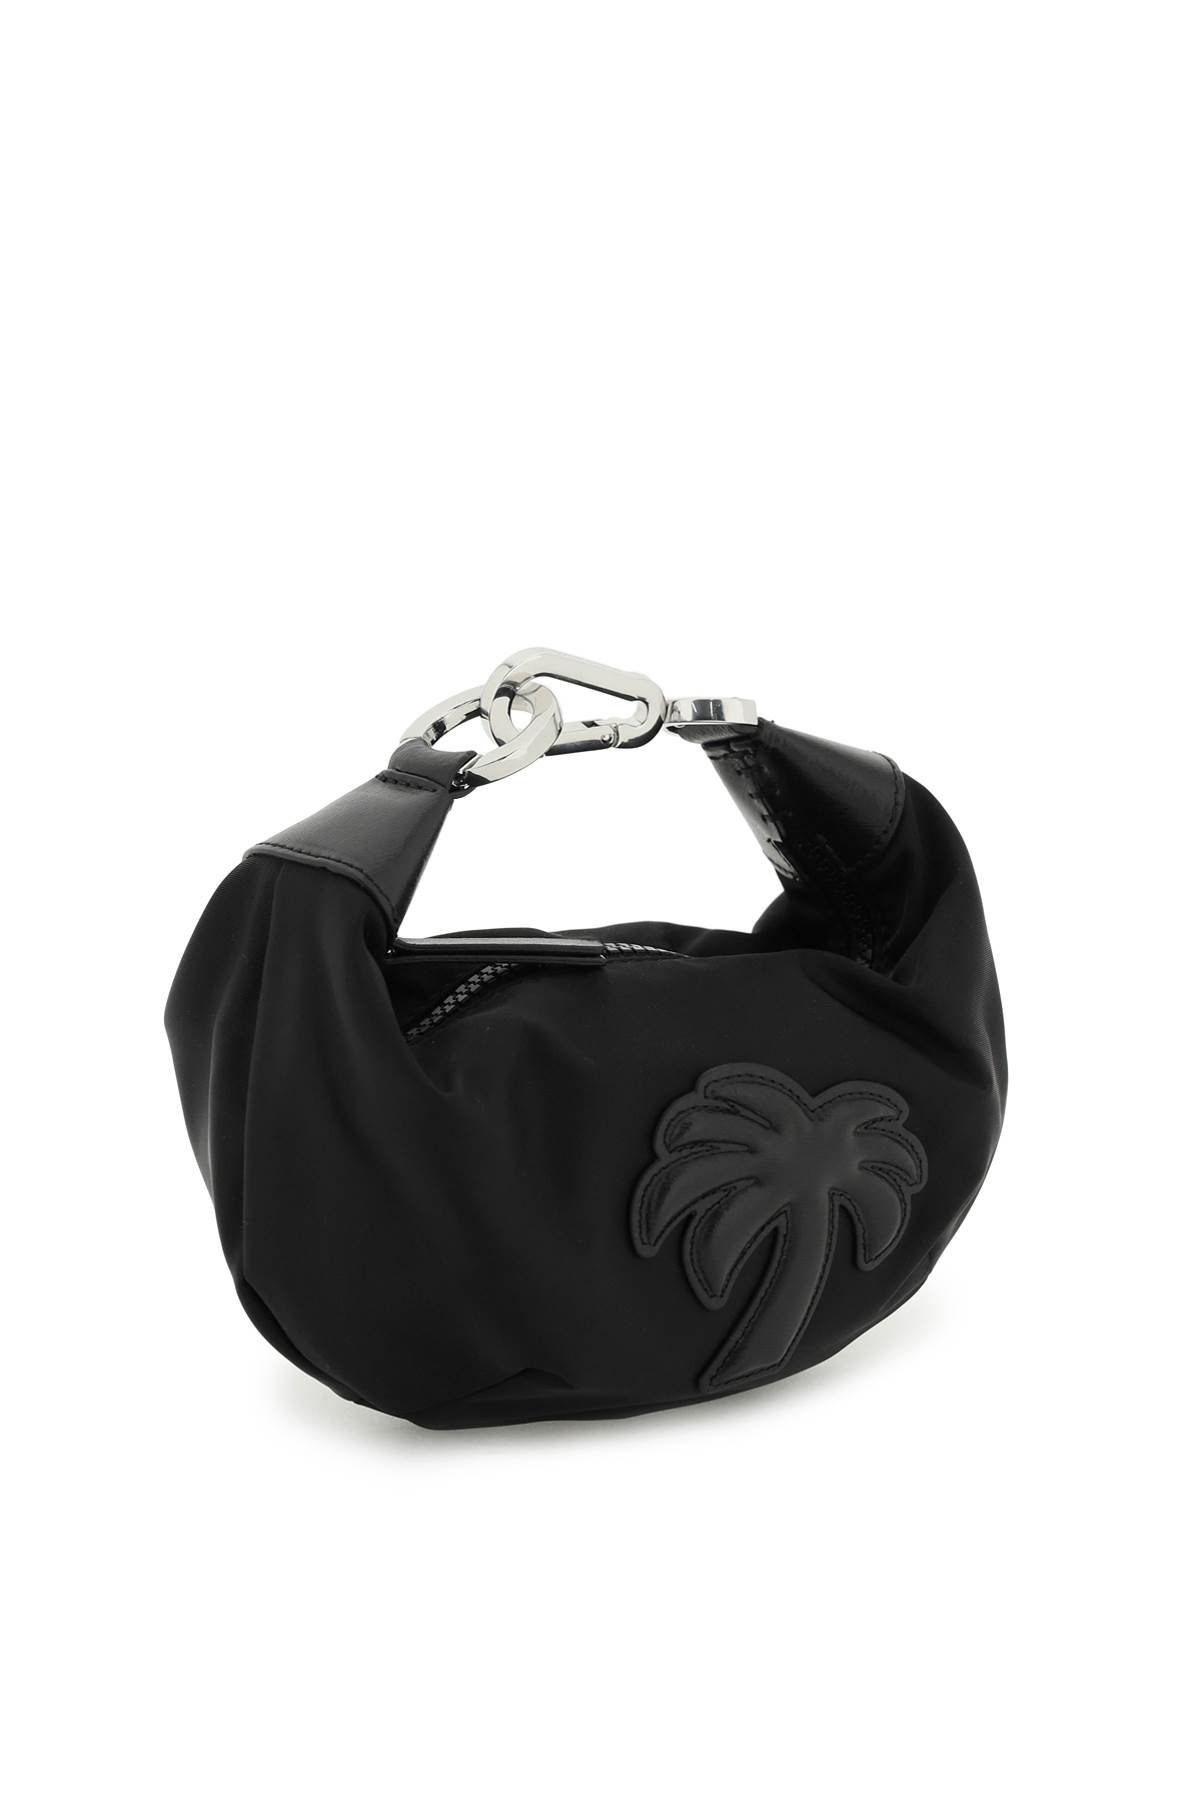 Shop Palm Angels Hobo Palm Mini Handbag In Black Black (black)